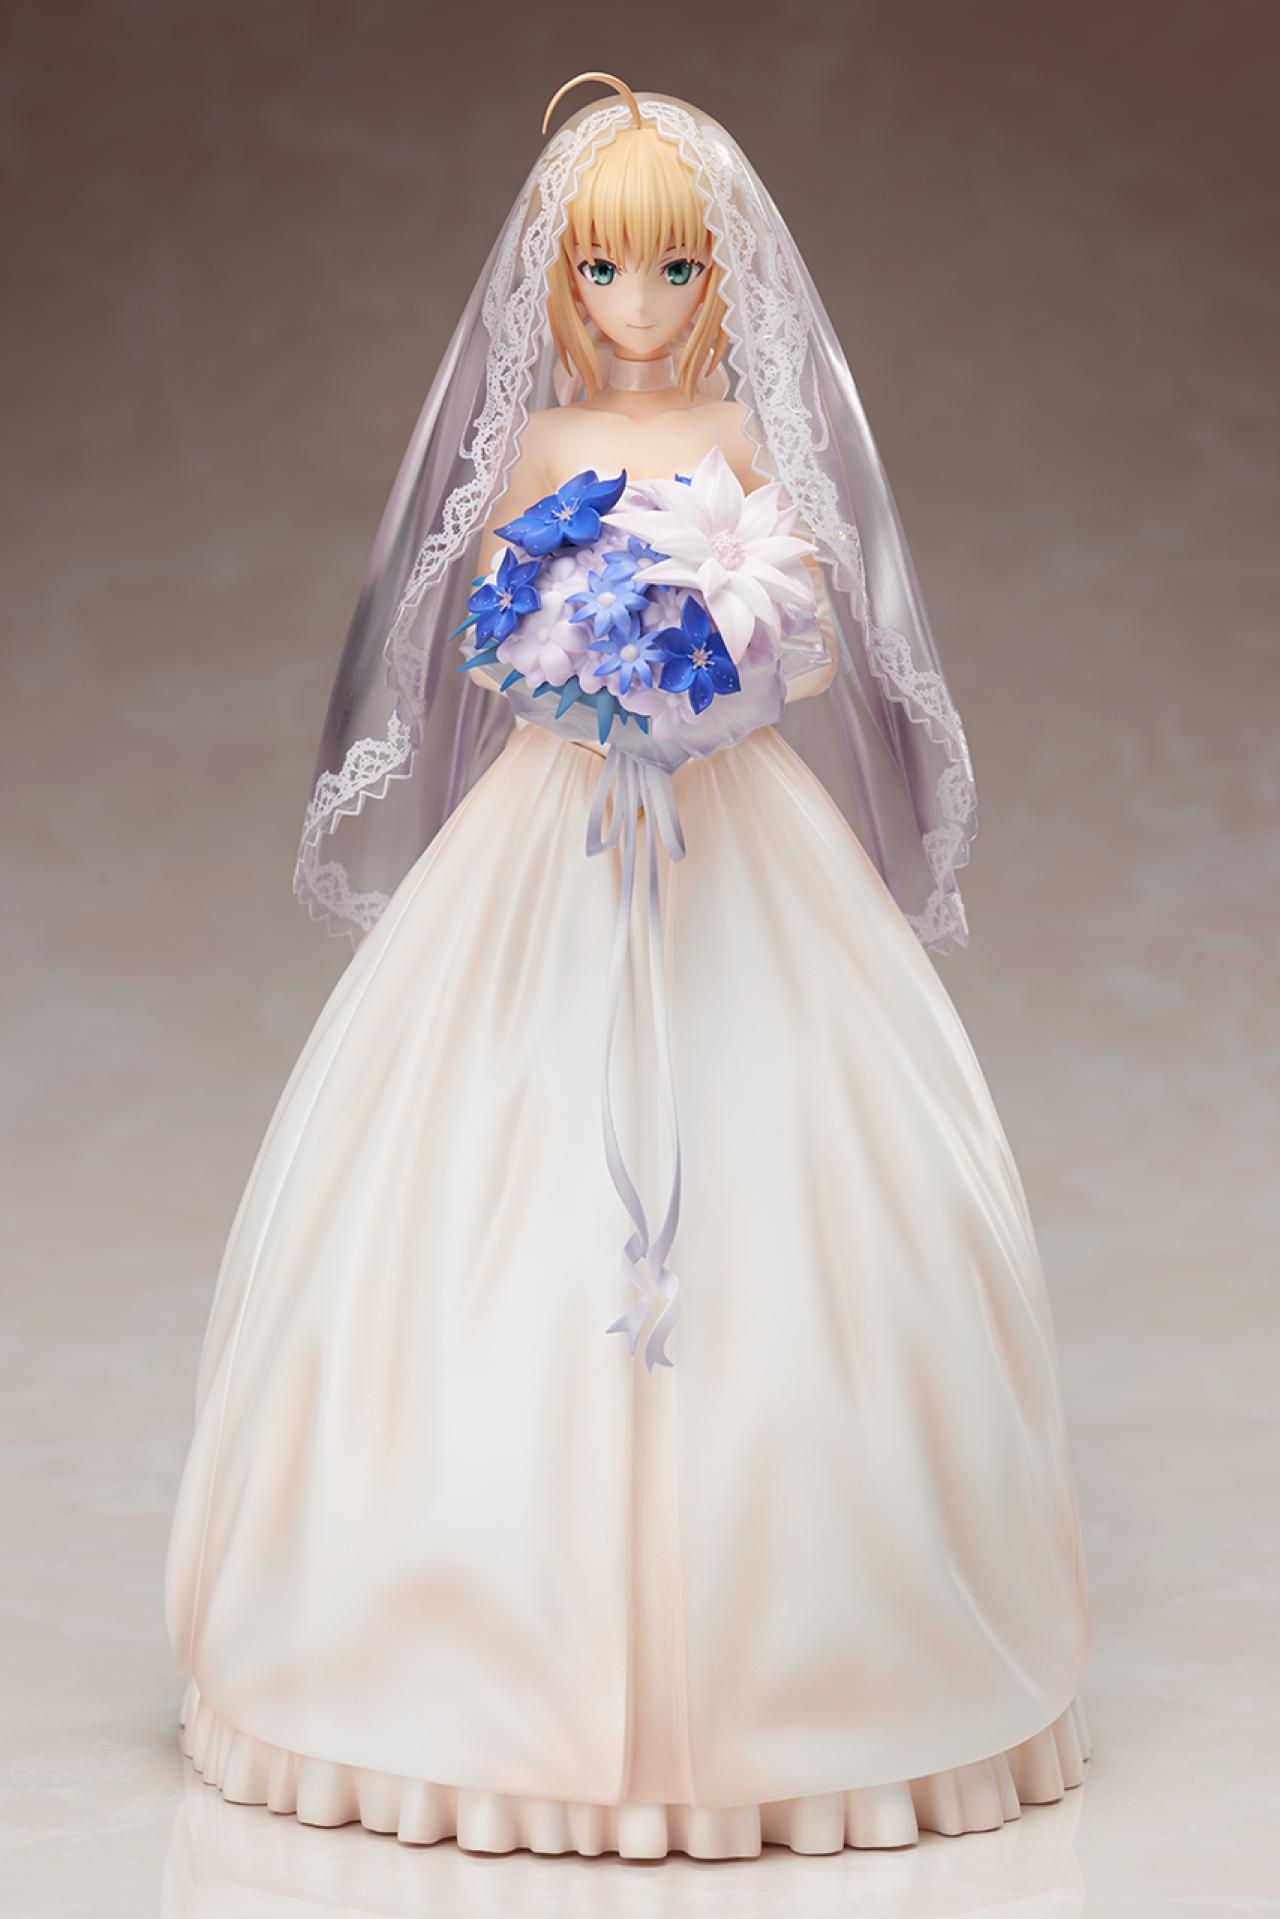 ANIPLEX+《Fate/stay night》阿尔托利亚·潘德拉贡Saber十周年婚纱版手办